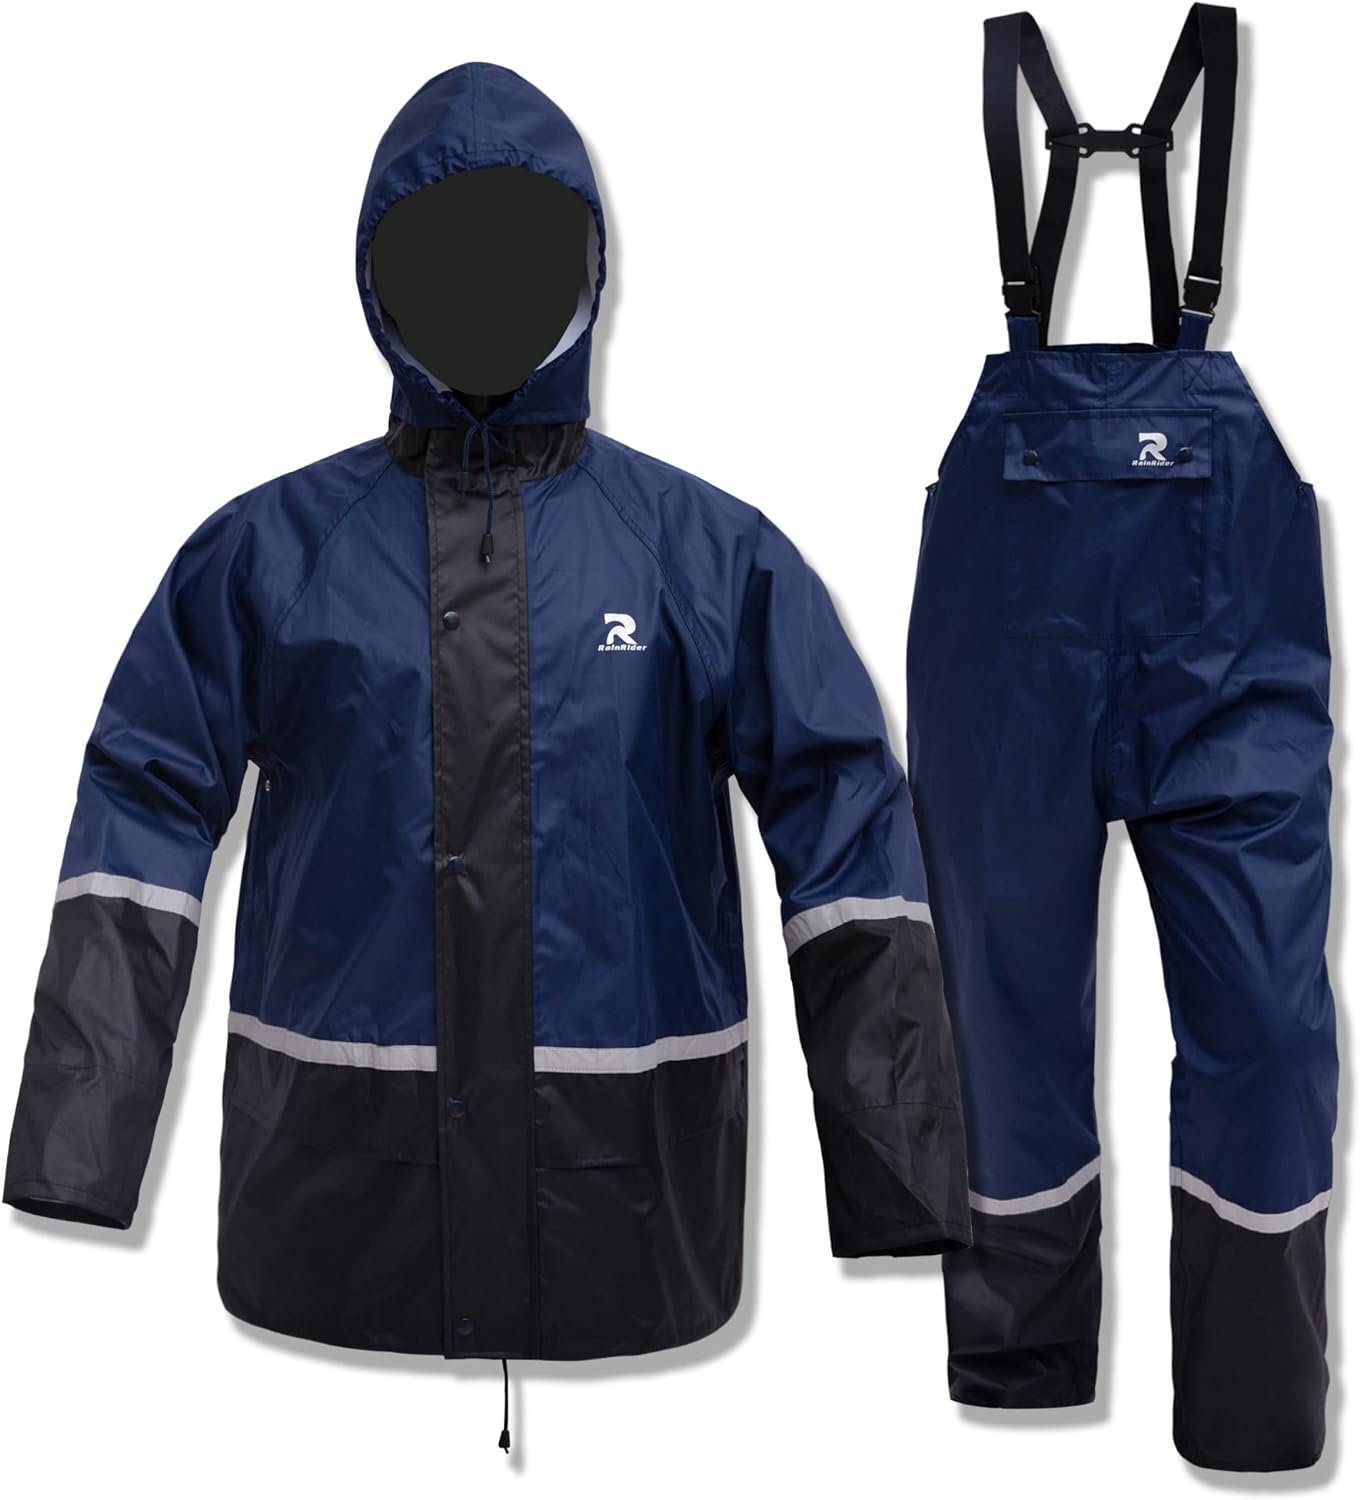 Generic RainRider Rain Suits for Men Waterproof Breathable Rain Gear Durable Oxford Rain Jacket Coat with Pants